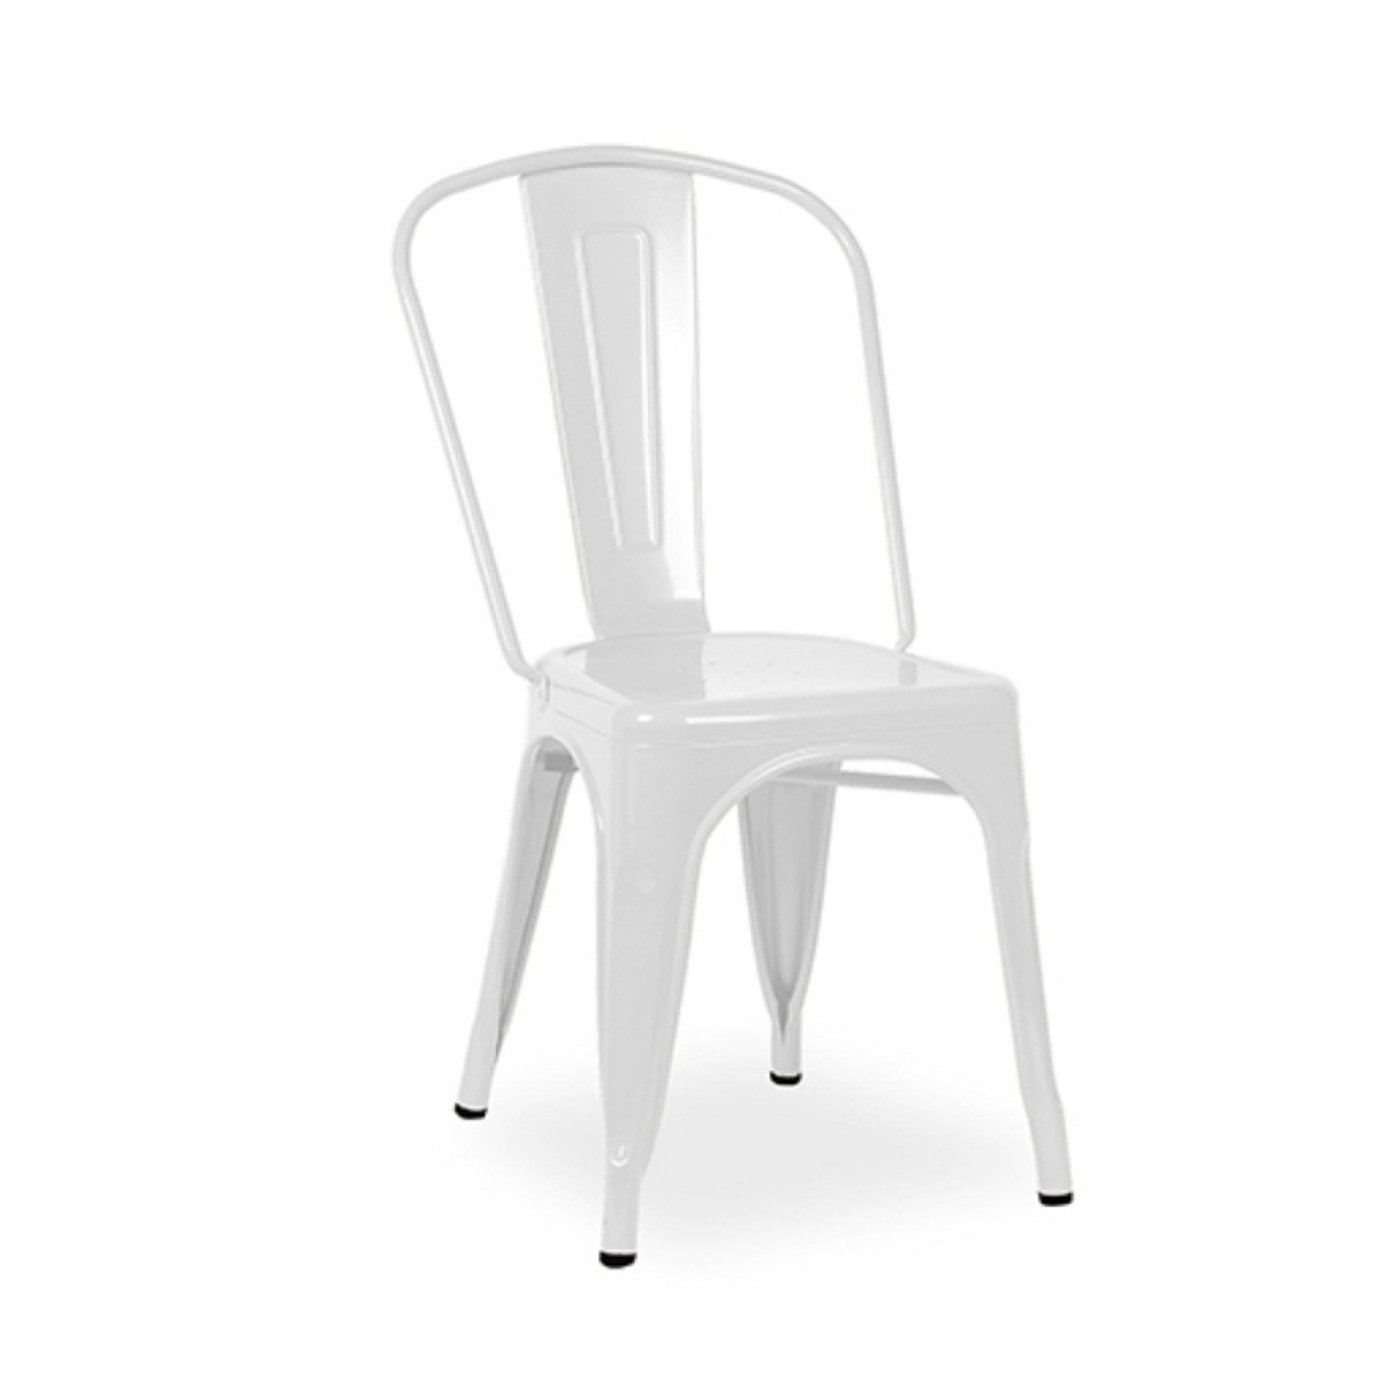 White Steel Xavier Cafe Chair.